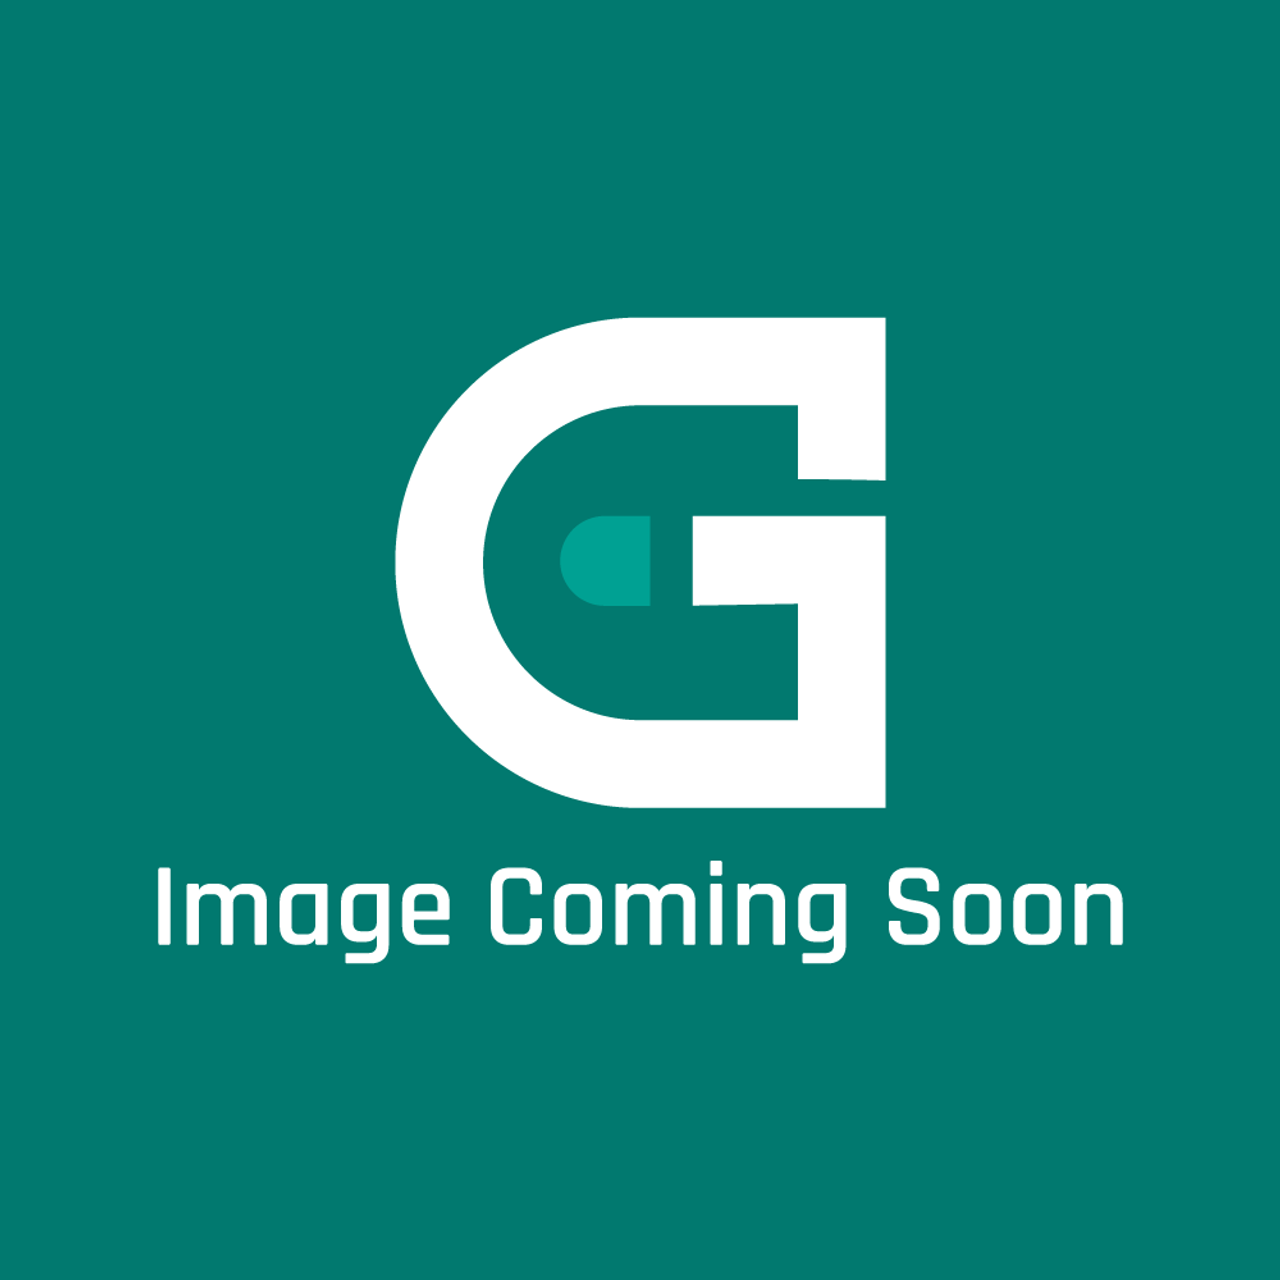 GE Appliances WE4M187 - DRYER TIMER - Image Coming Soon!